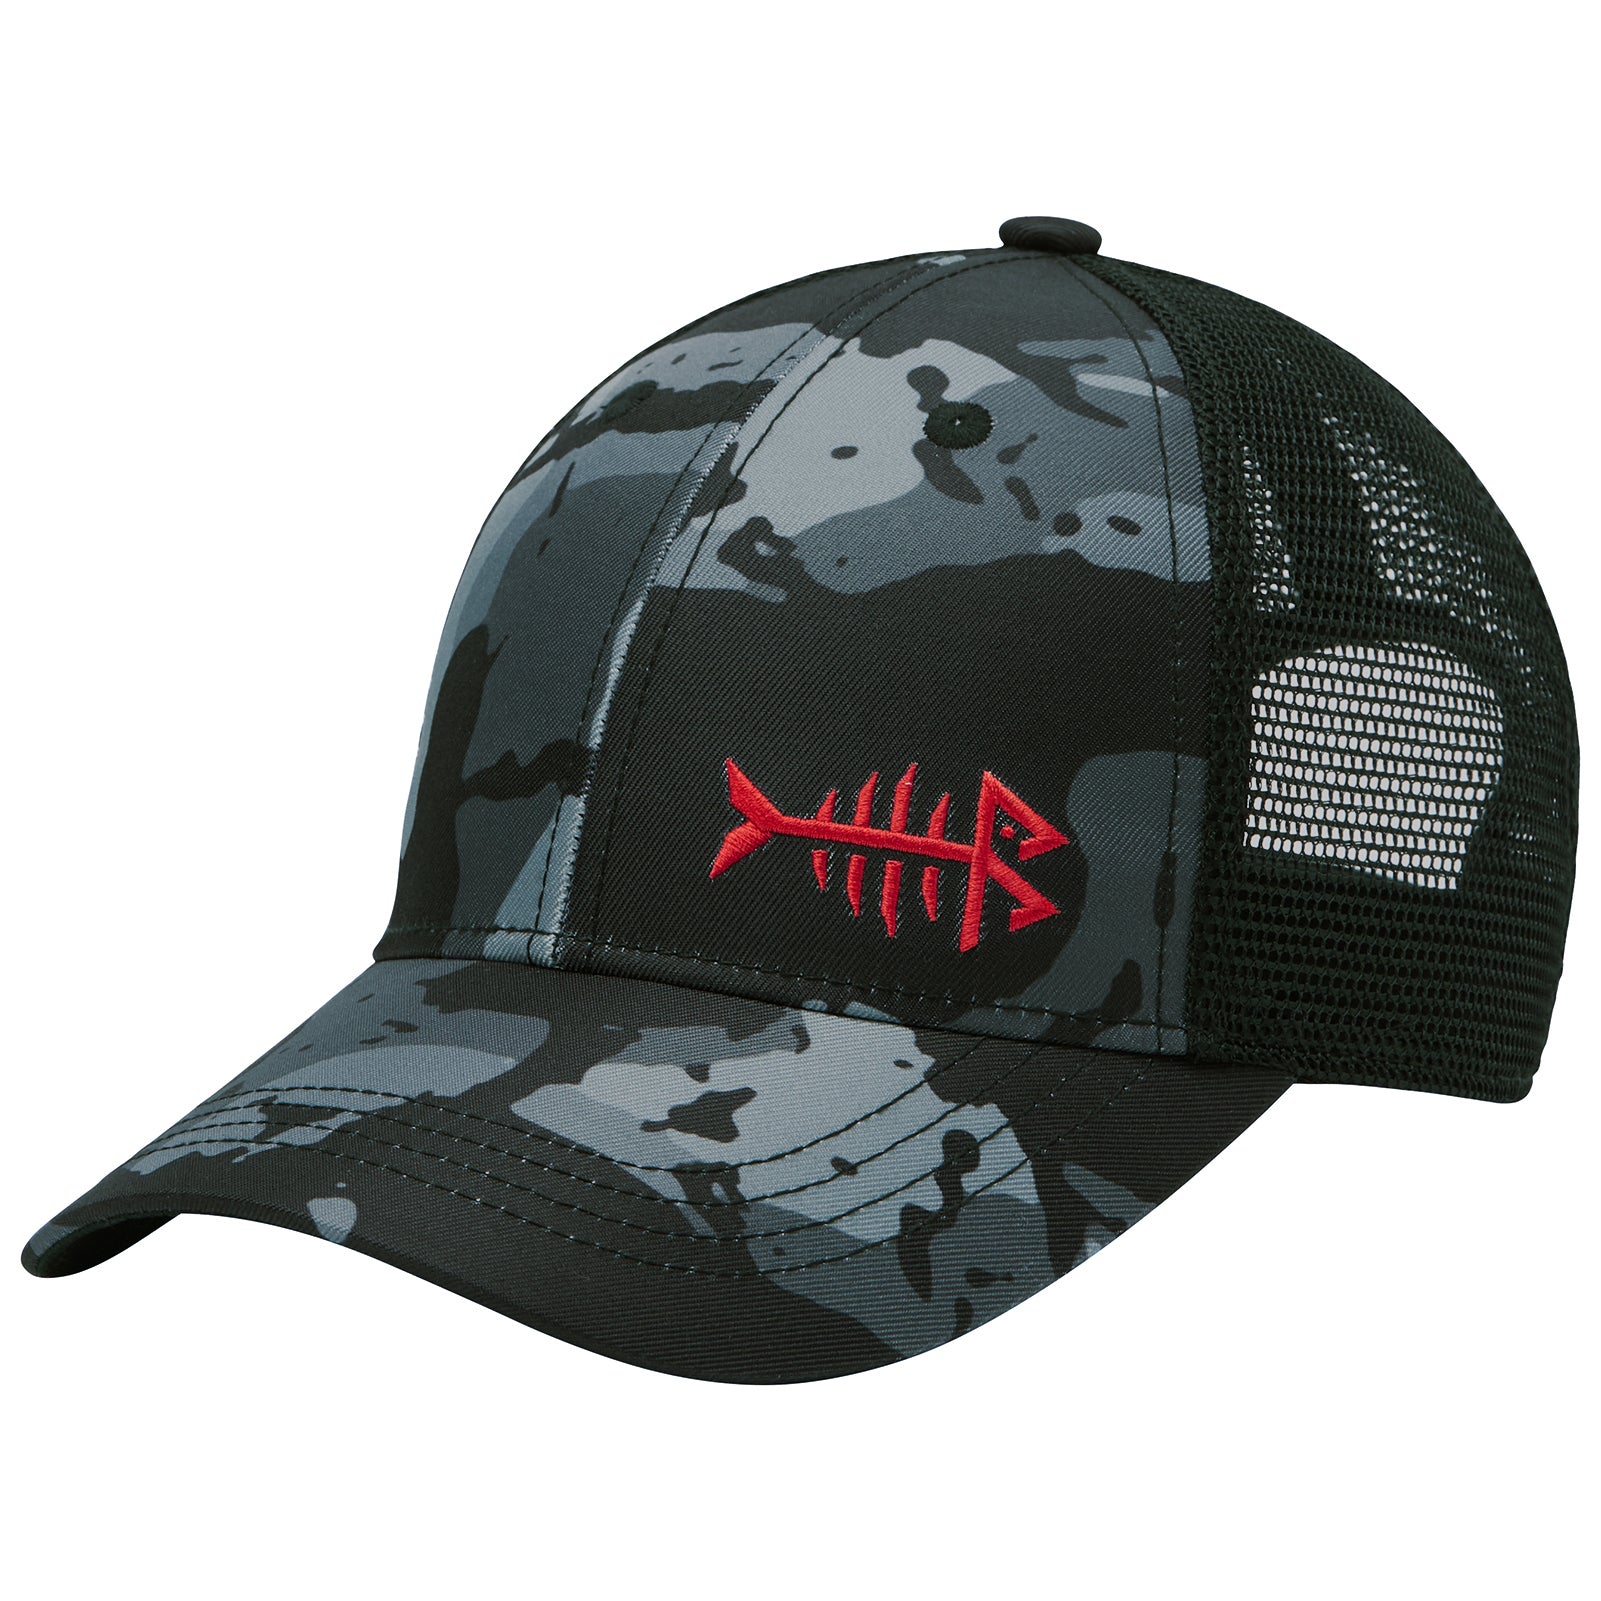 Bassdash Unisex Baseball Trucker Cap Mesh Back Adjustable Fishing Hat, Black Camo